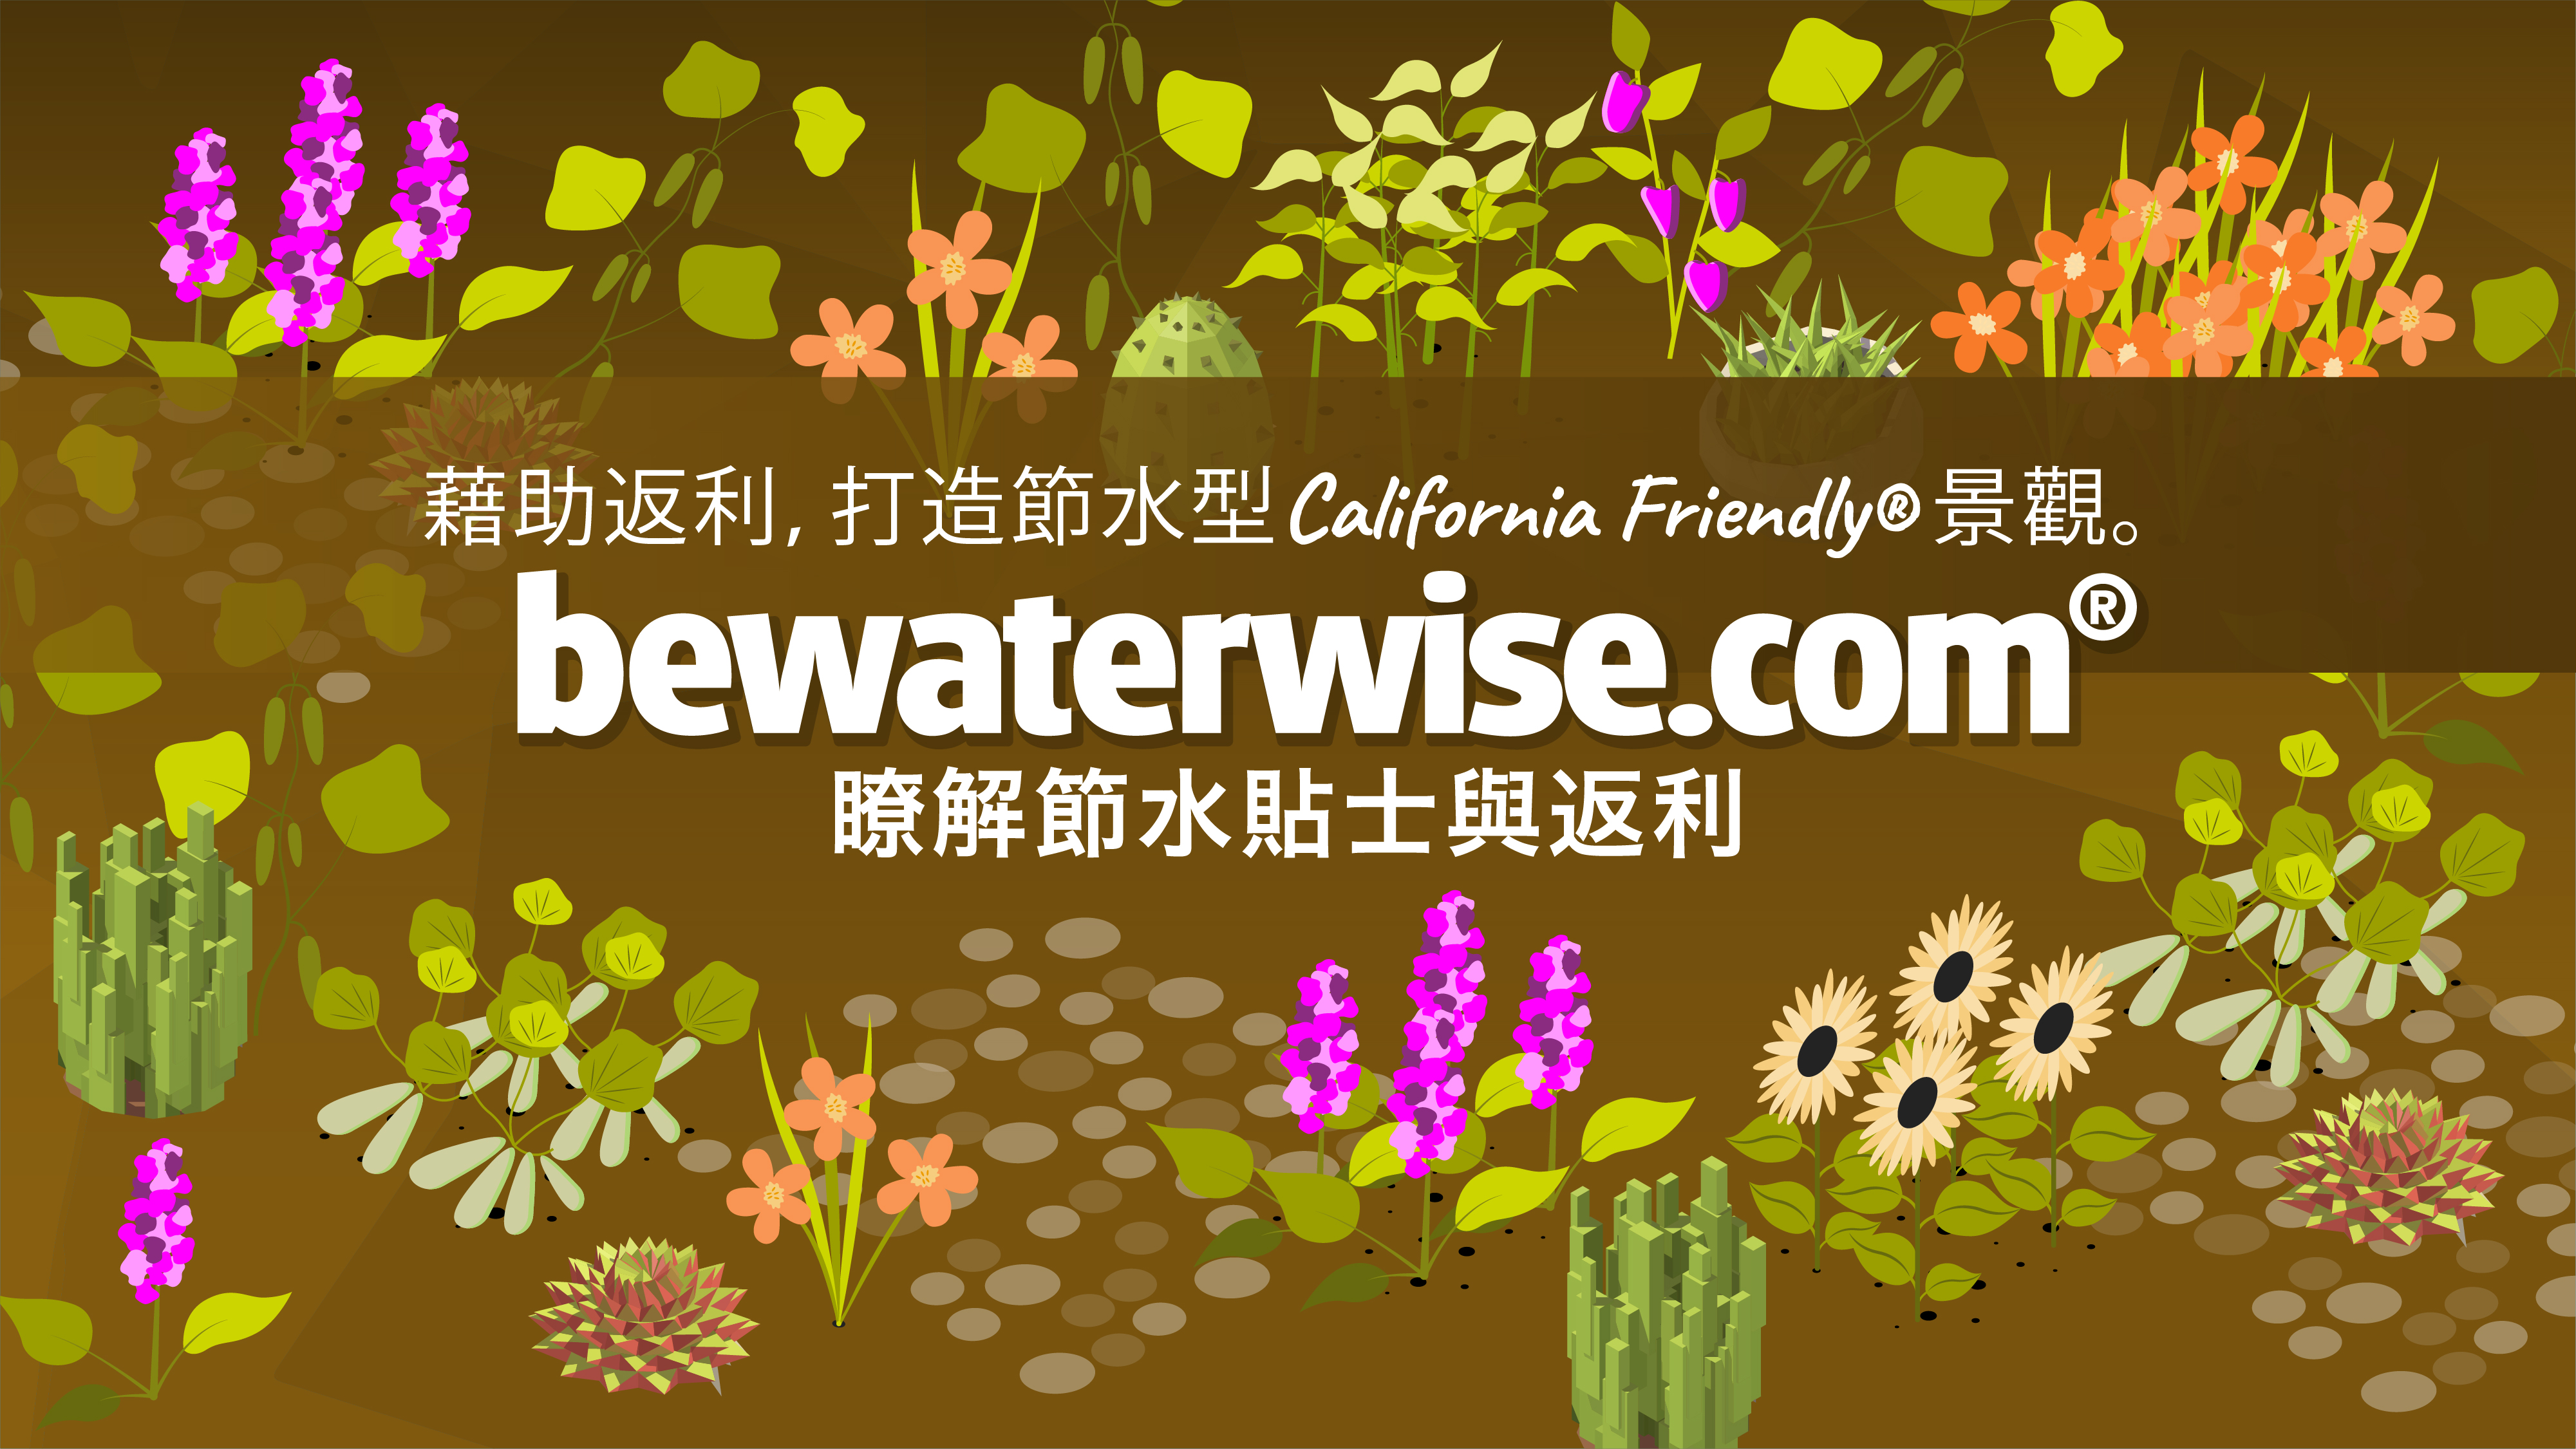 Bewaterwise.com Chinese translation